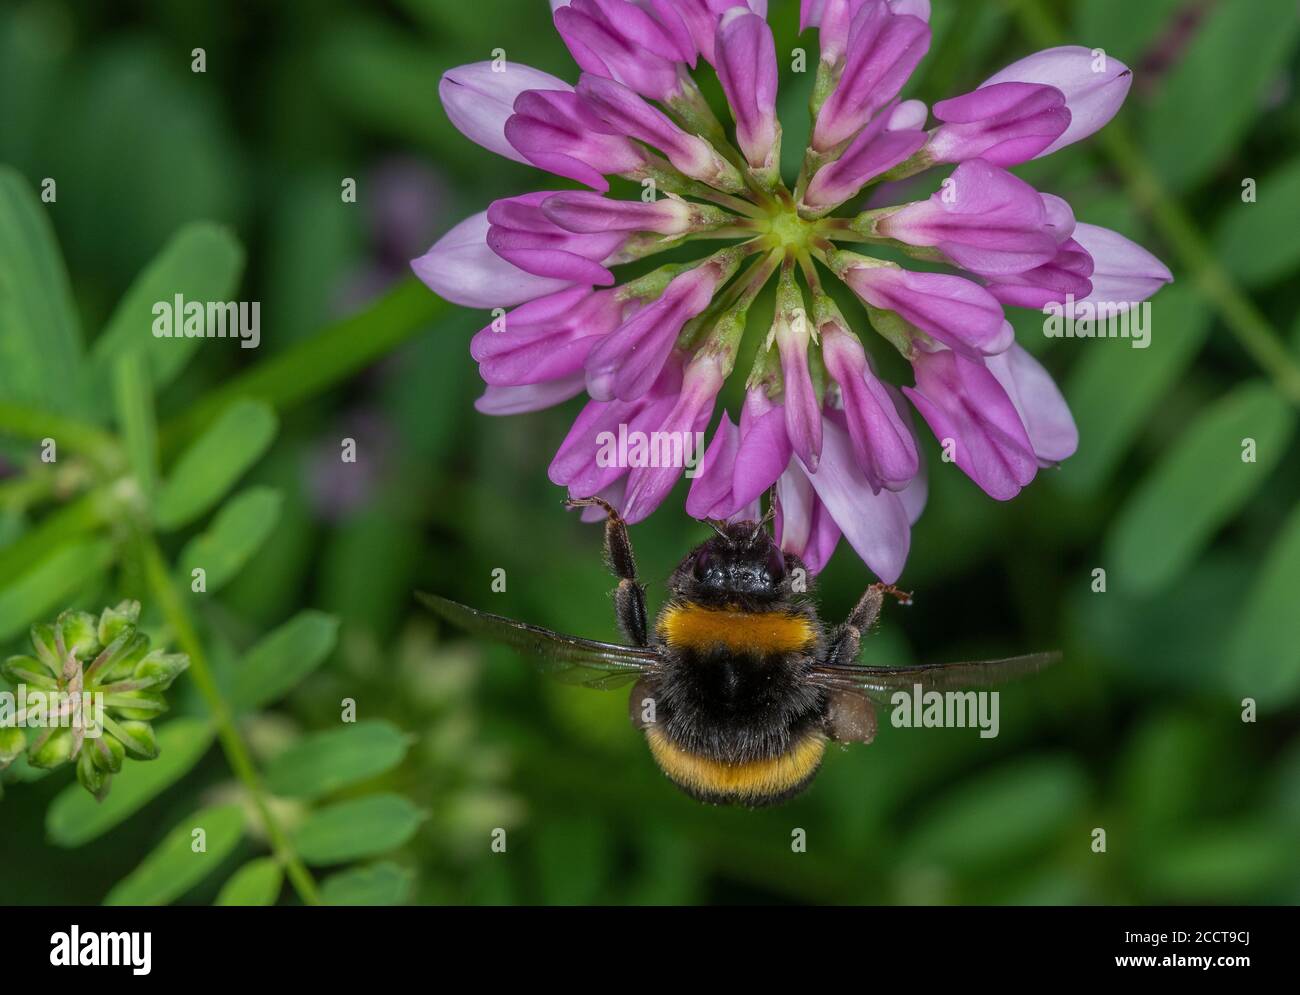 Buff-tailed bumblebee, Bombus terrestris, feeding on Crown Vetch flowers in garden. Stock Photo